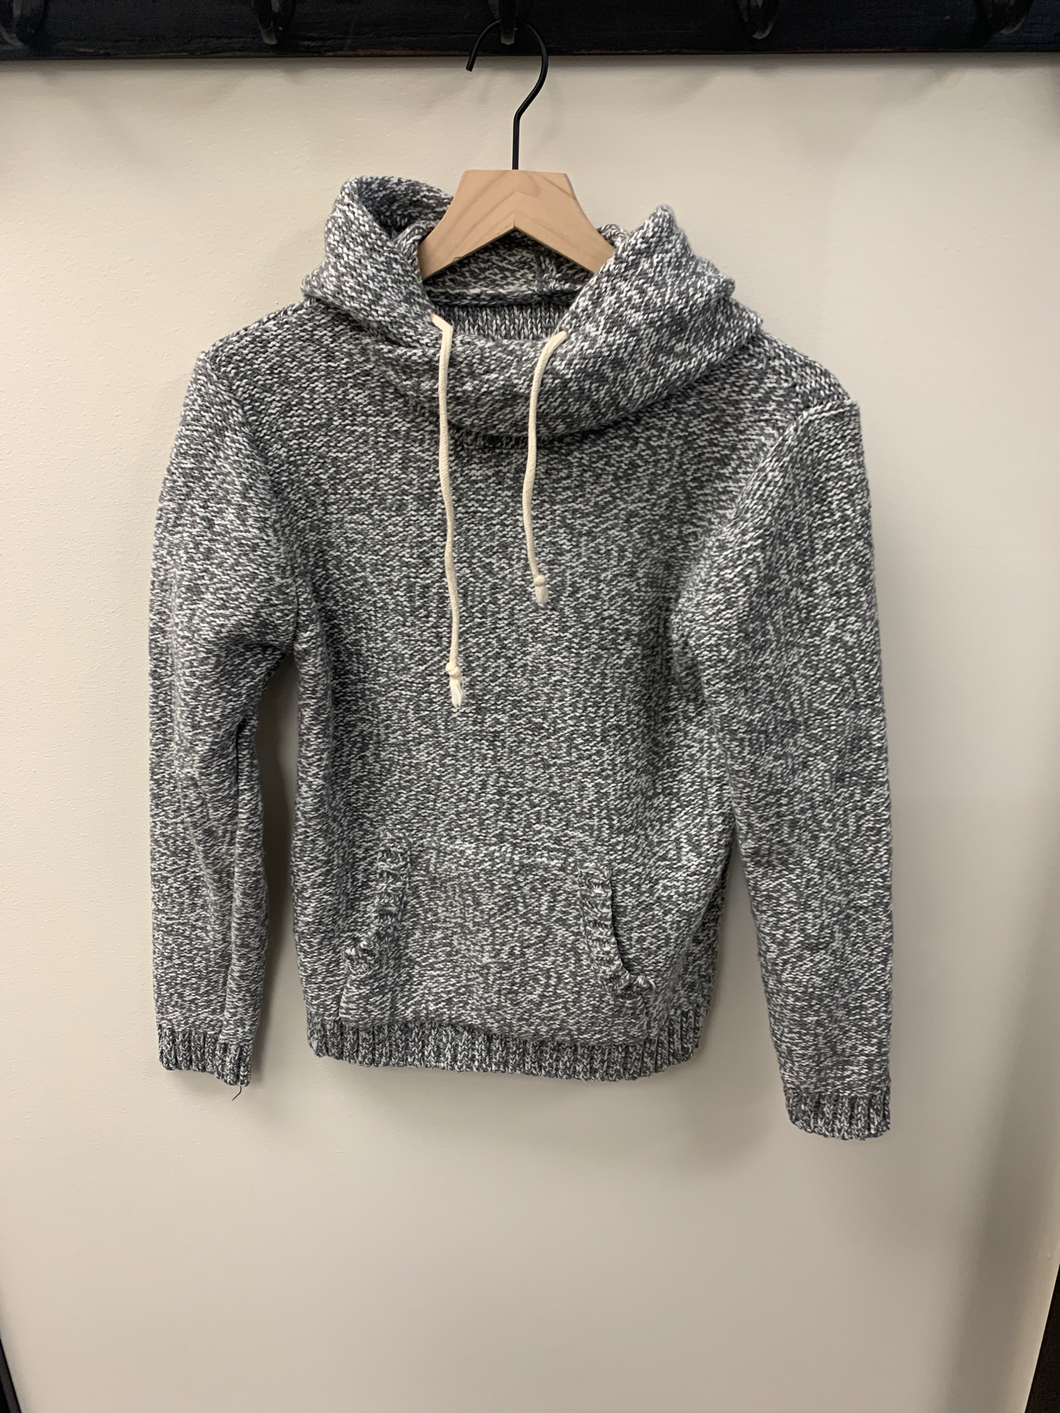 Sweater Size Medium